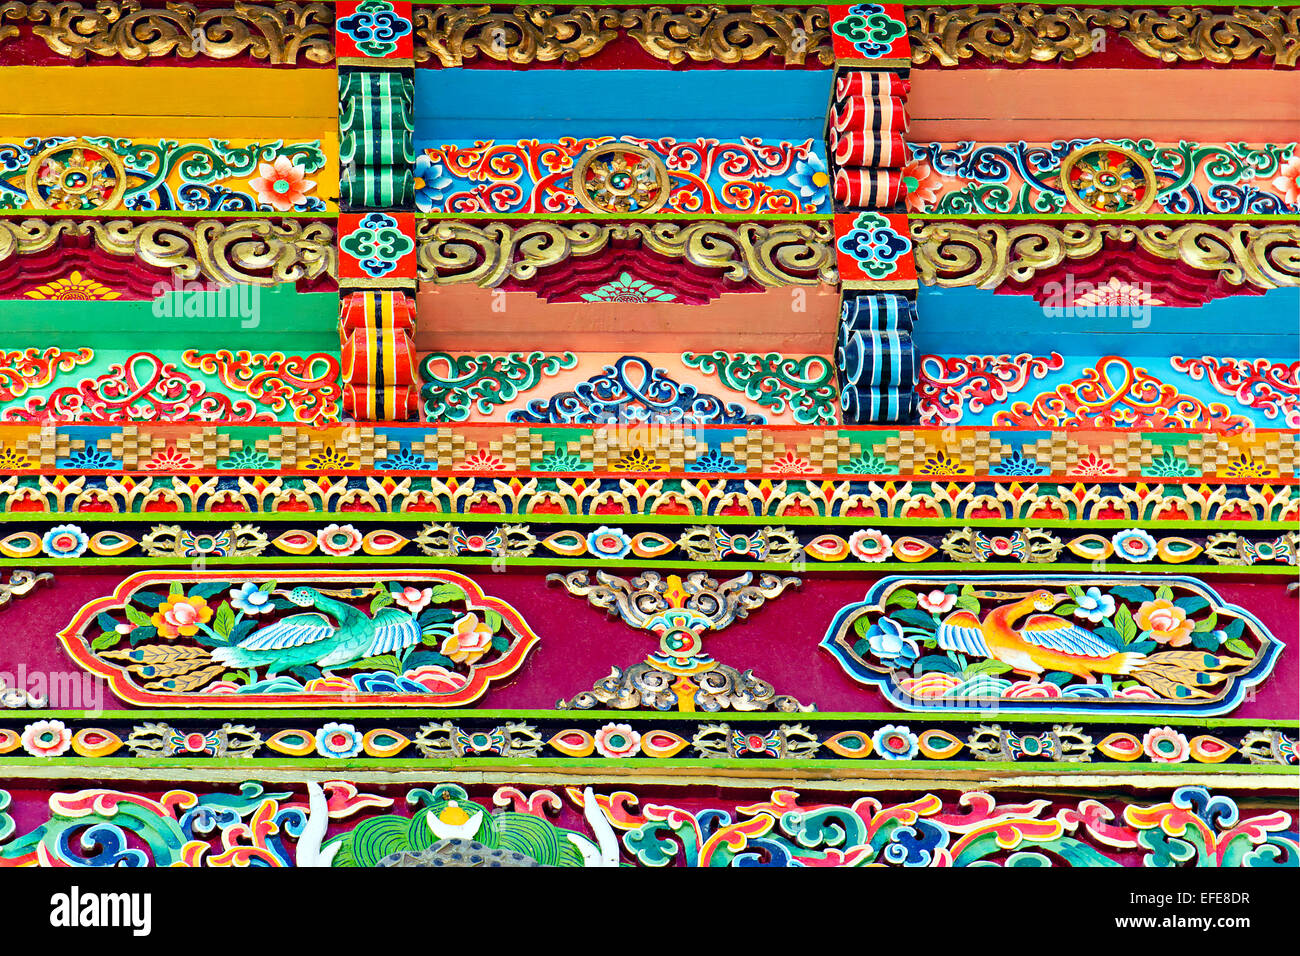 Tibetan architectural decorative ornament in the background Stock Photo